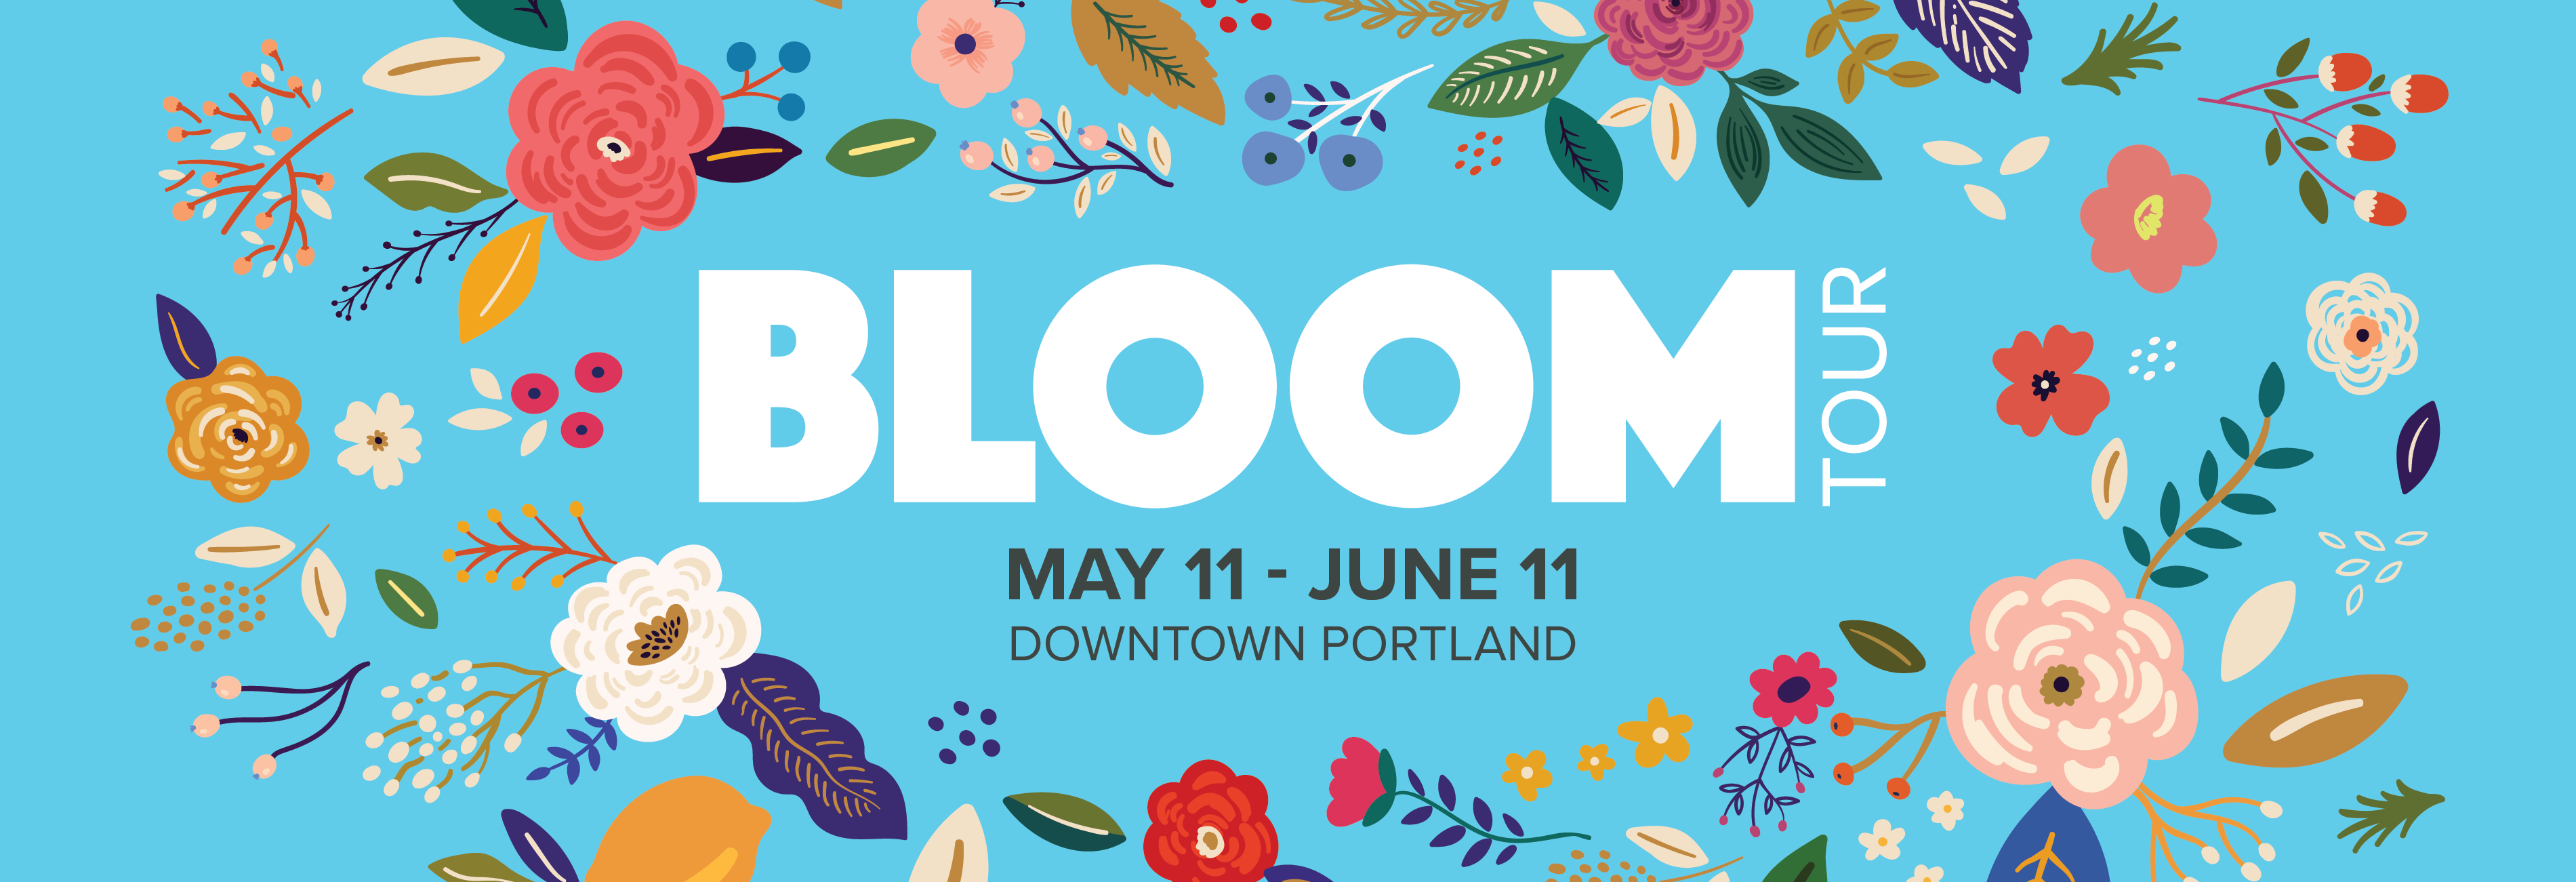 Portland Bloom Tour